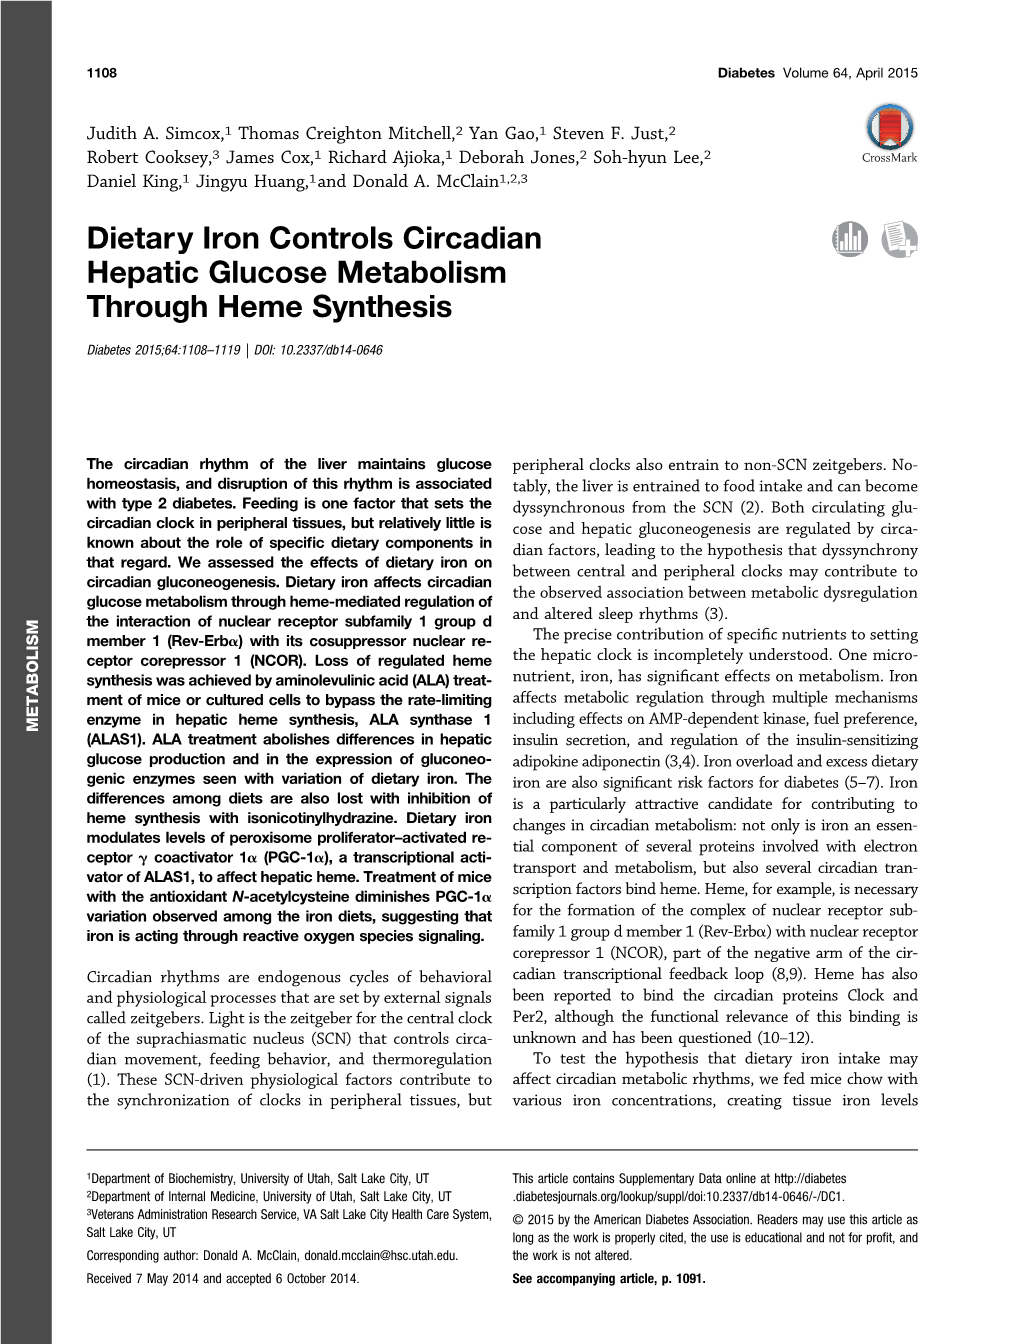 Dietary Iron Controls Circadian Hepatic Glucose Metabolism Through Heme Synthesis